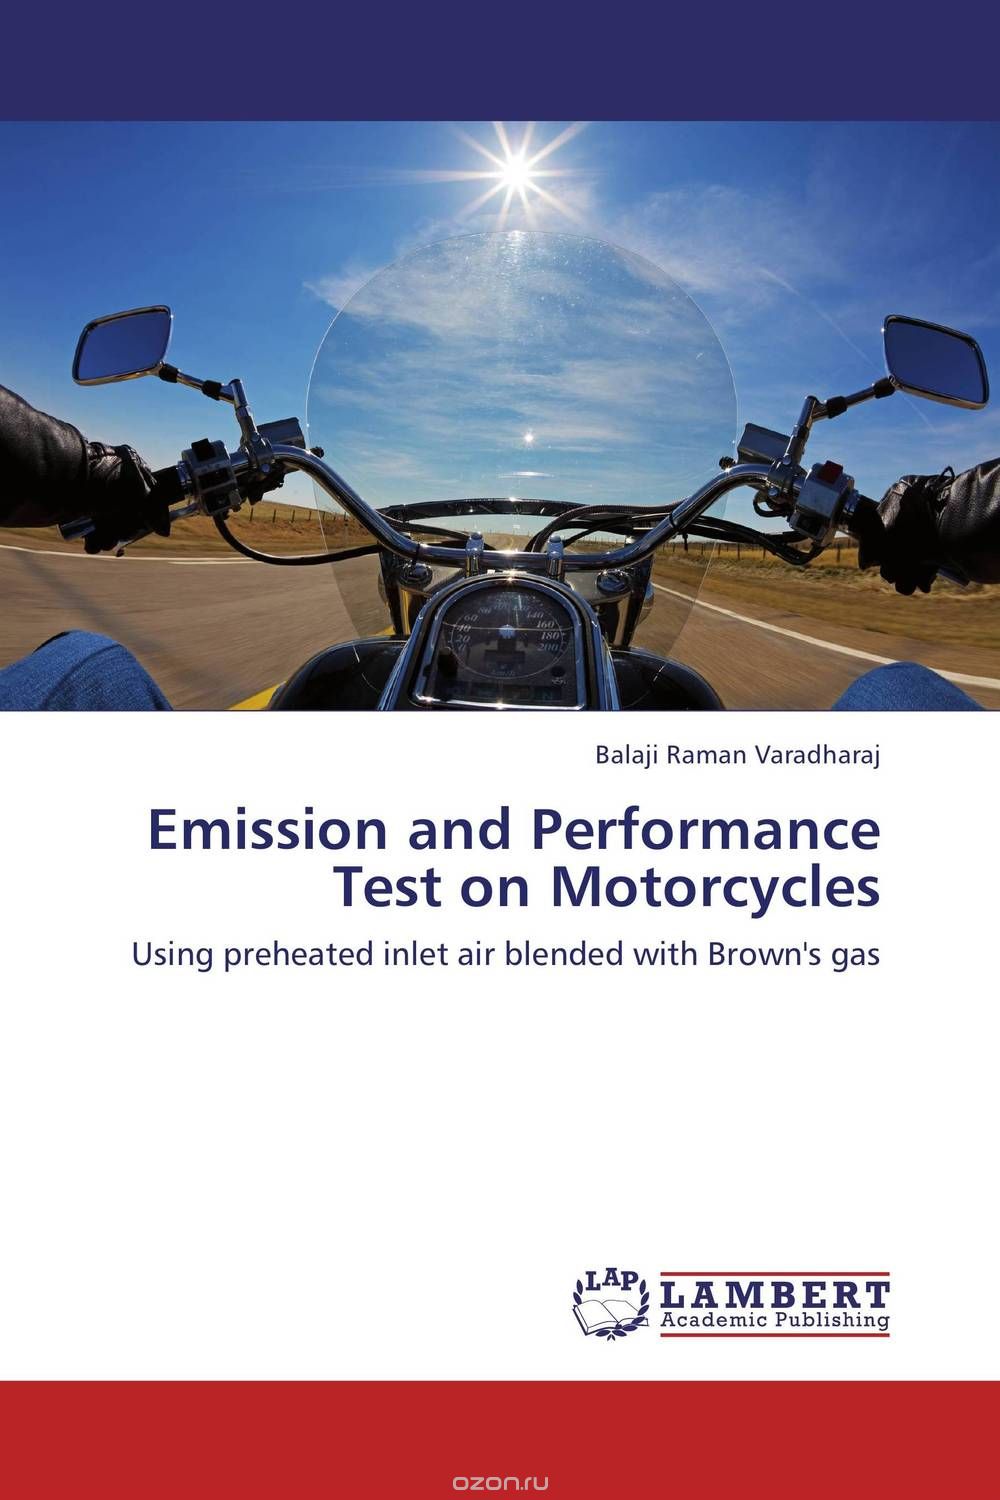 Скачать книгу "Emission and Performance Test on Motorcycles"